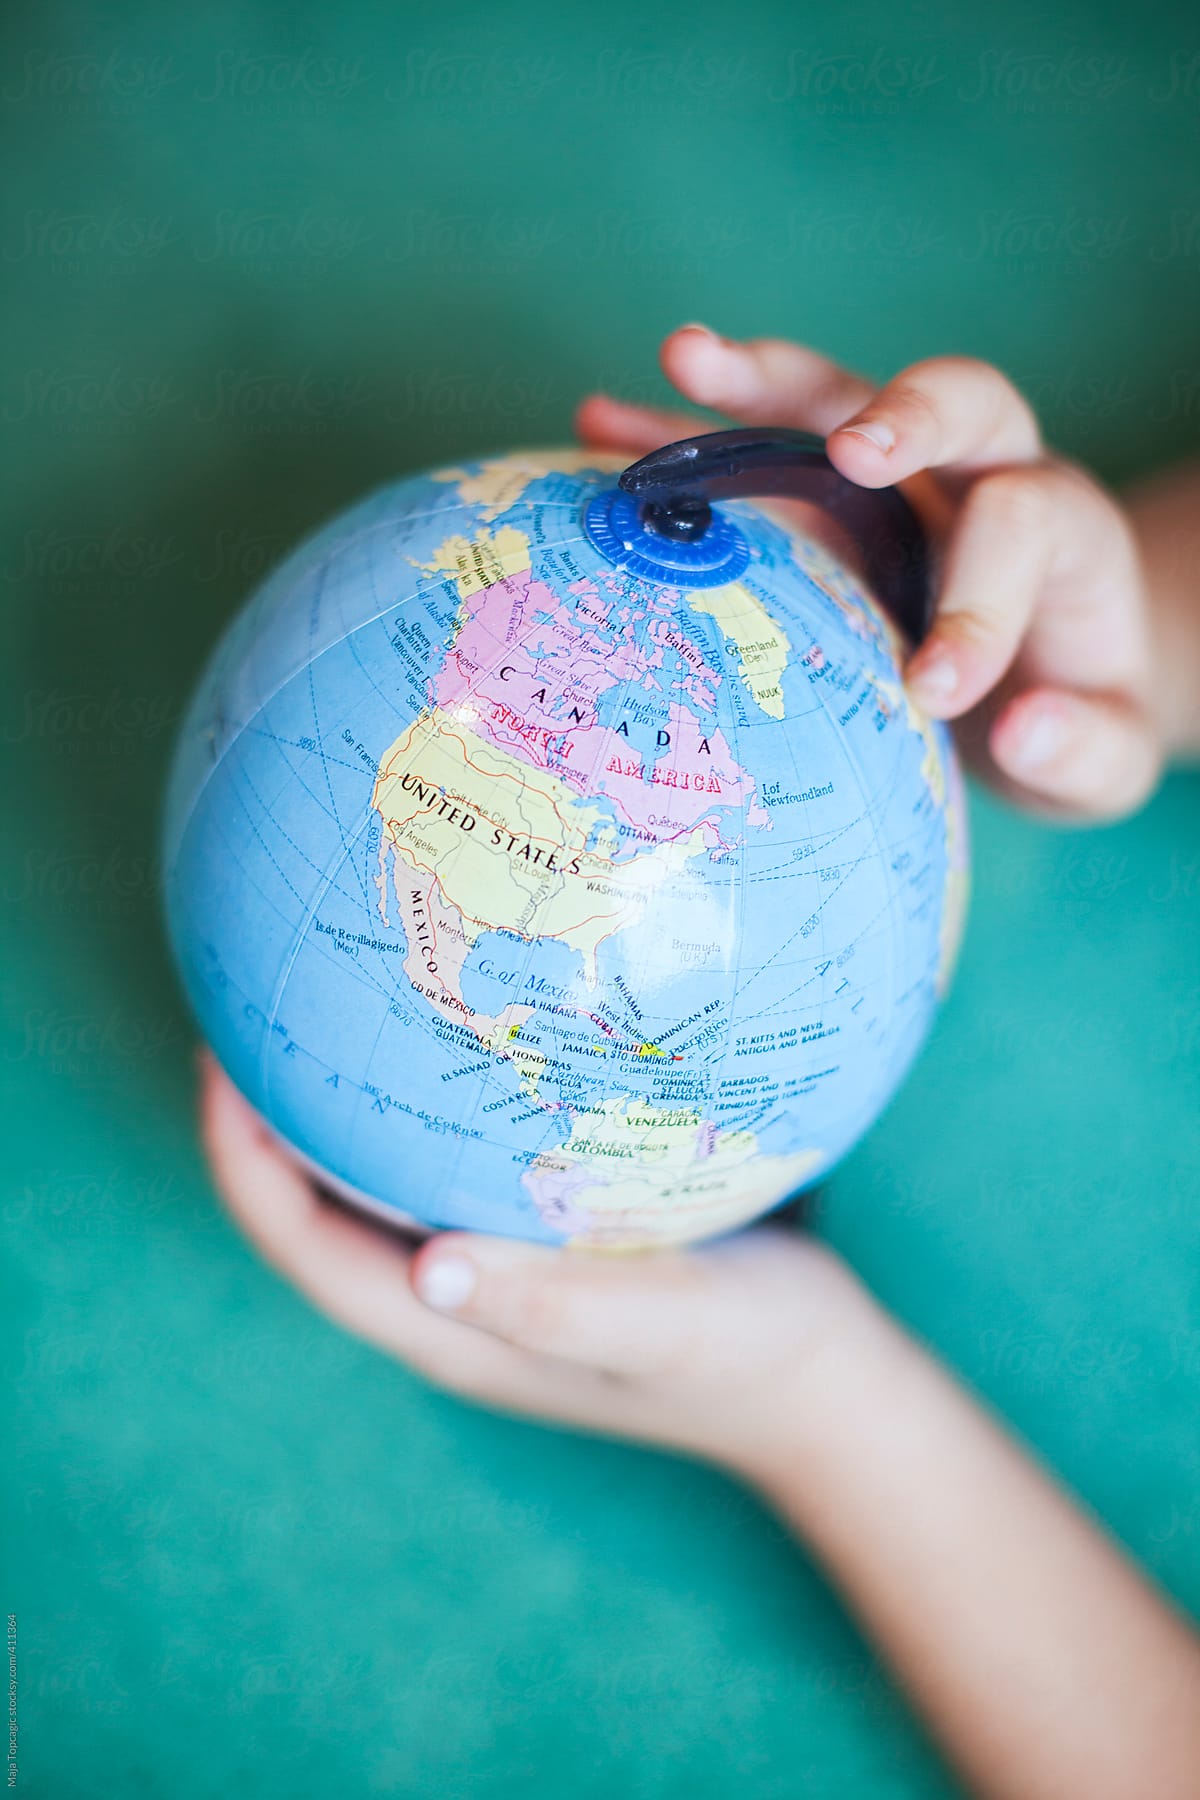 Little child hands holding a globe